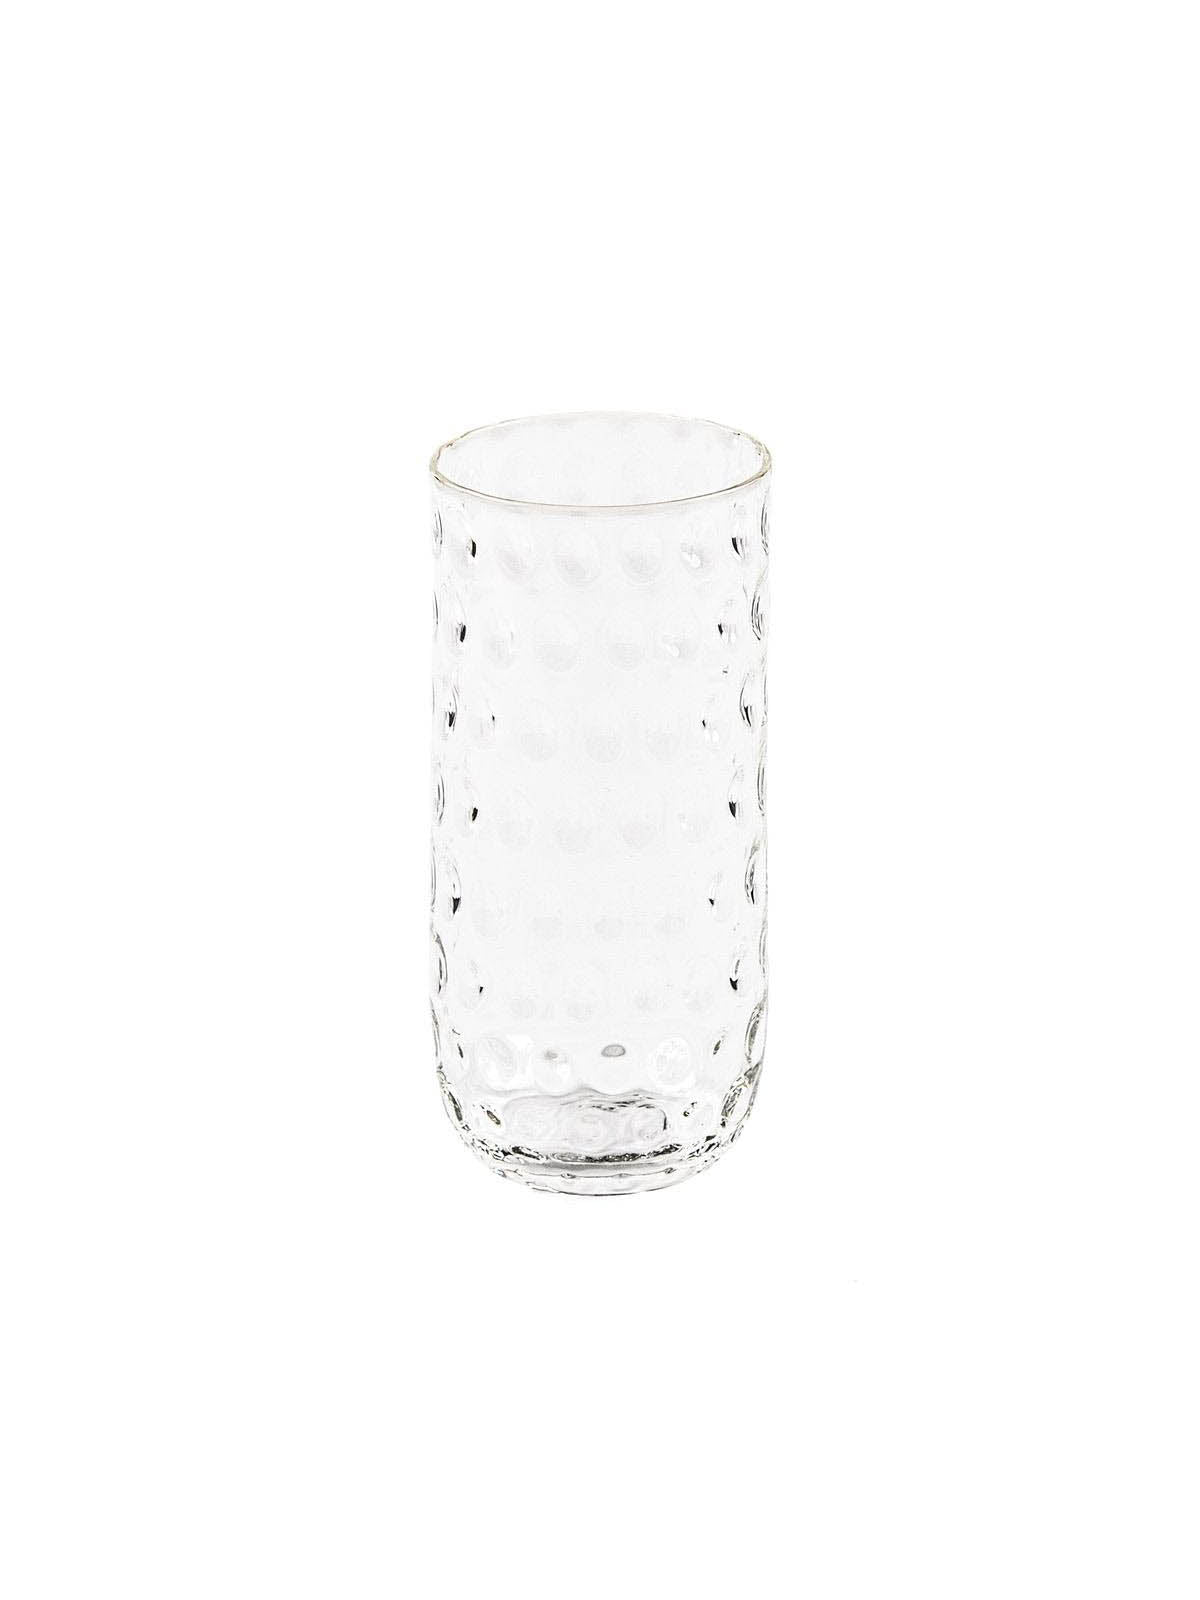 Vandglas i glas H15xD7cm